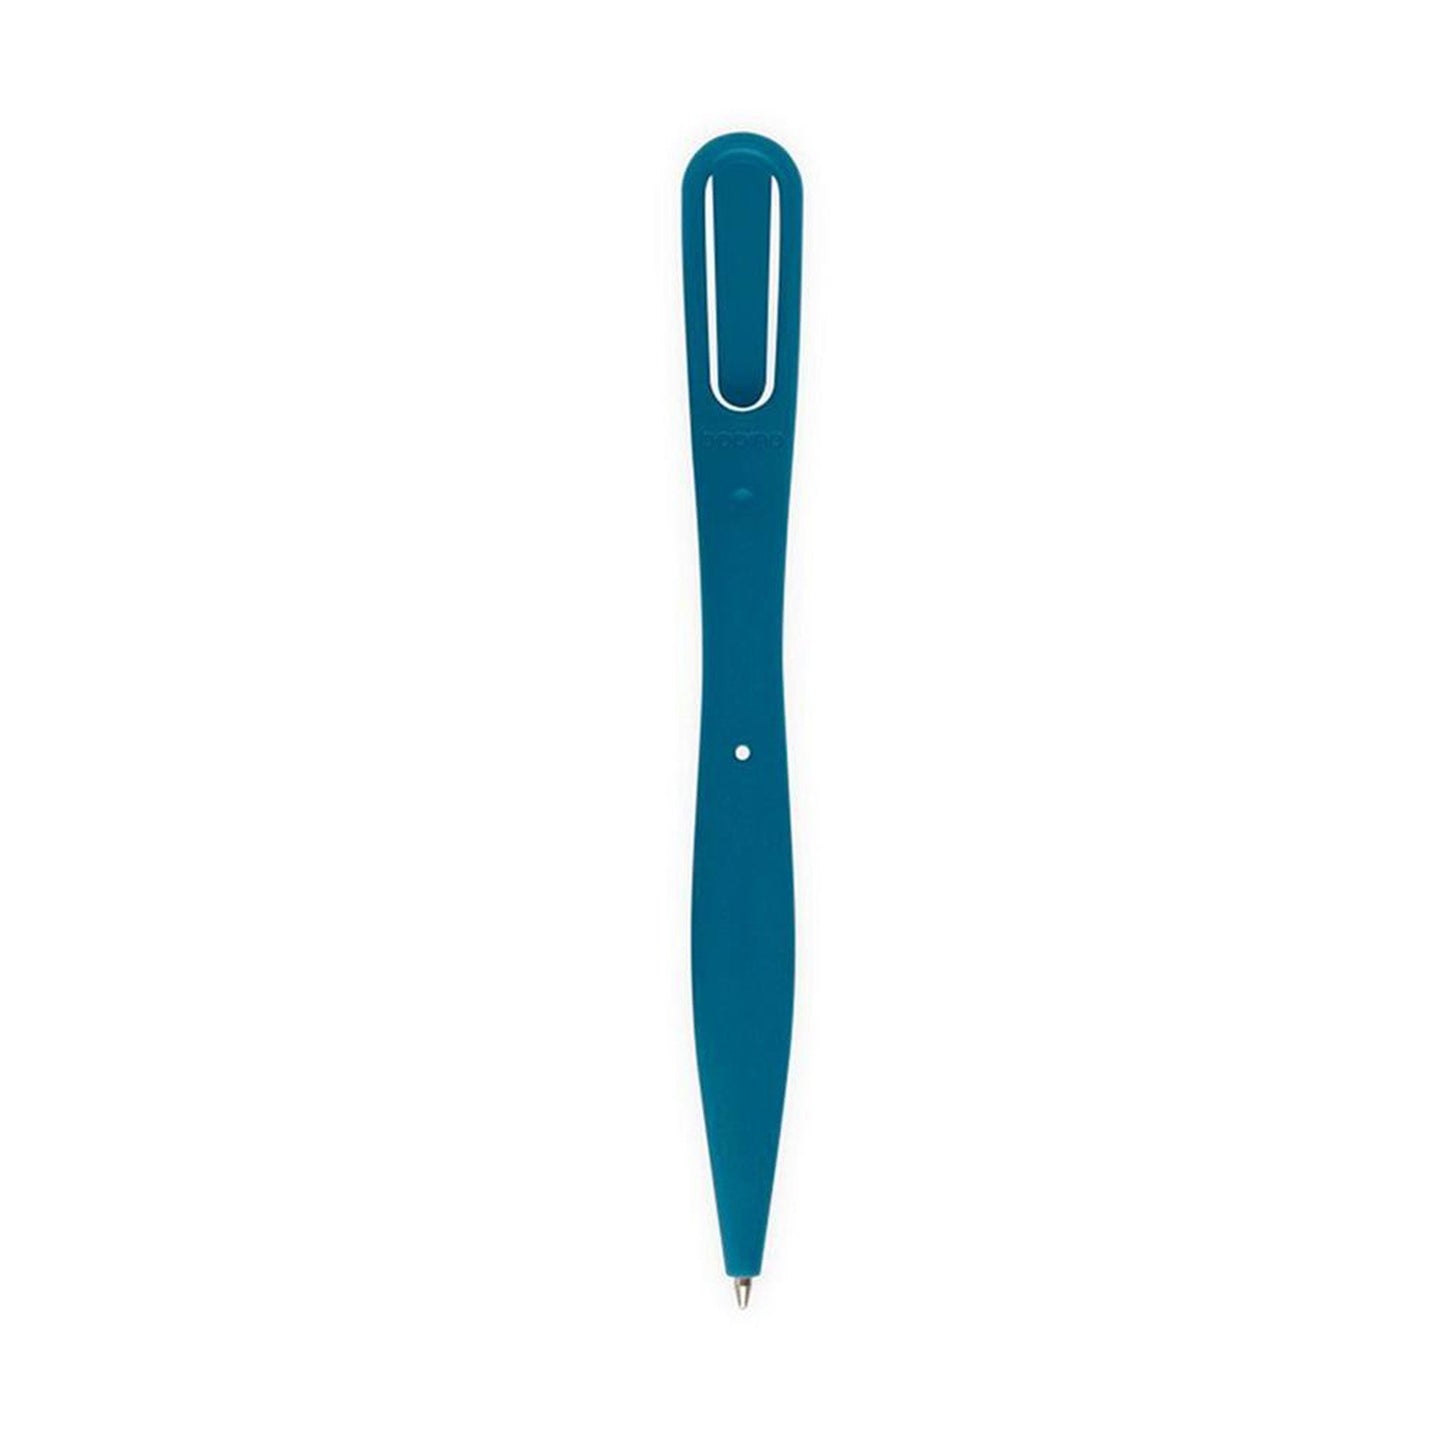 Bookmark Pen from Bobino